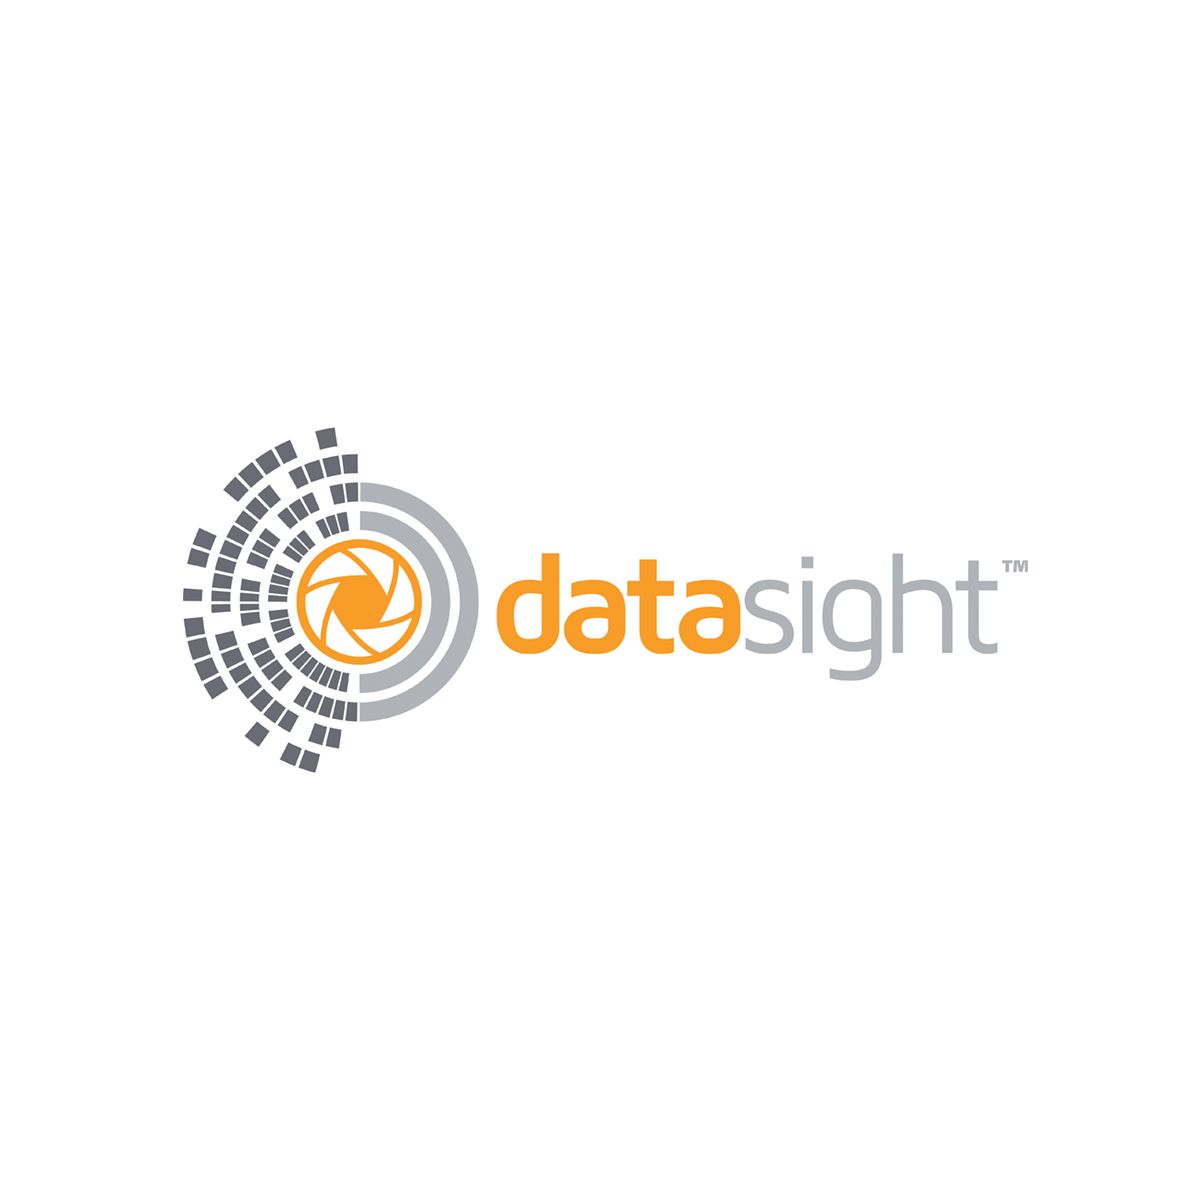 Datasight logo.jpg